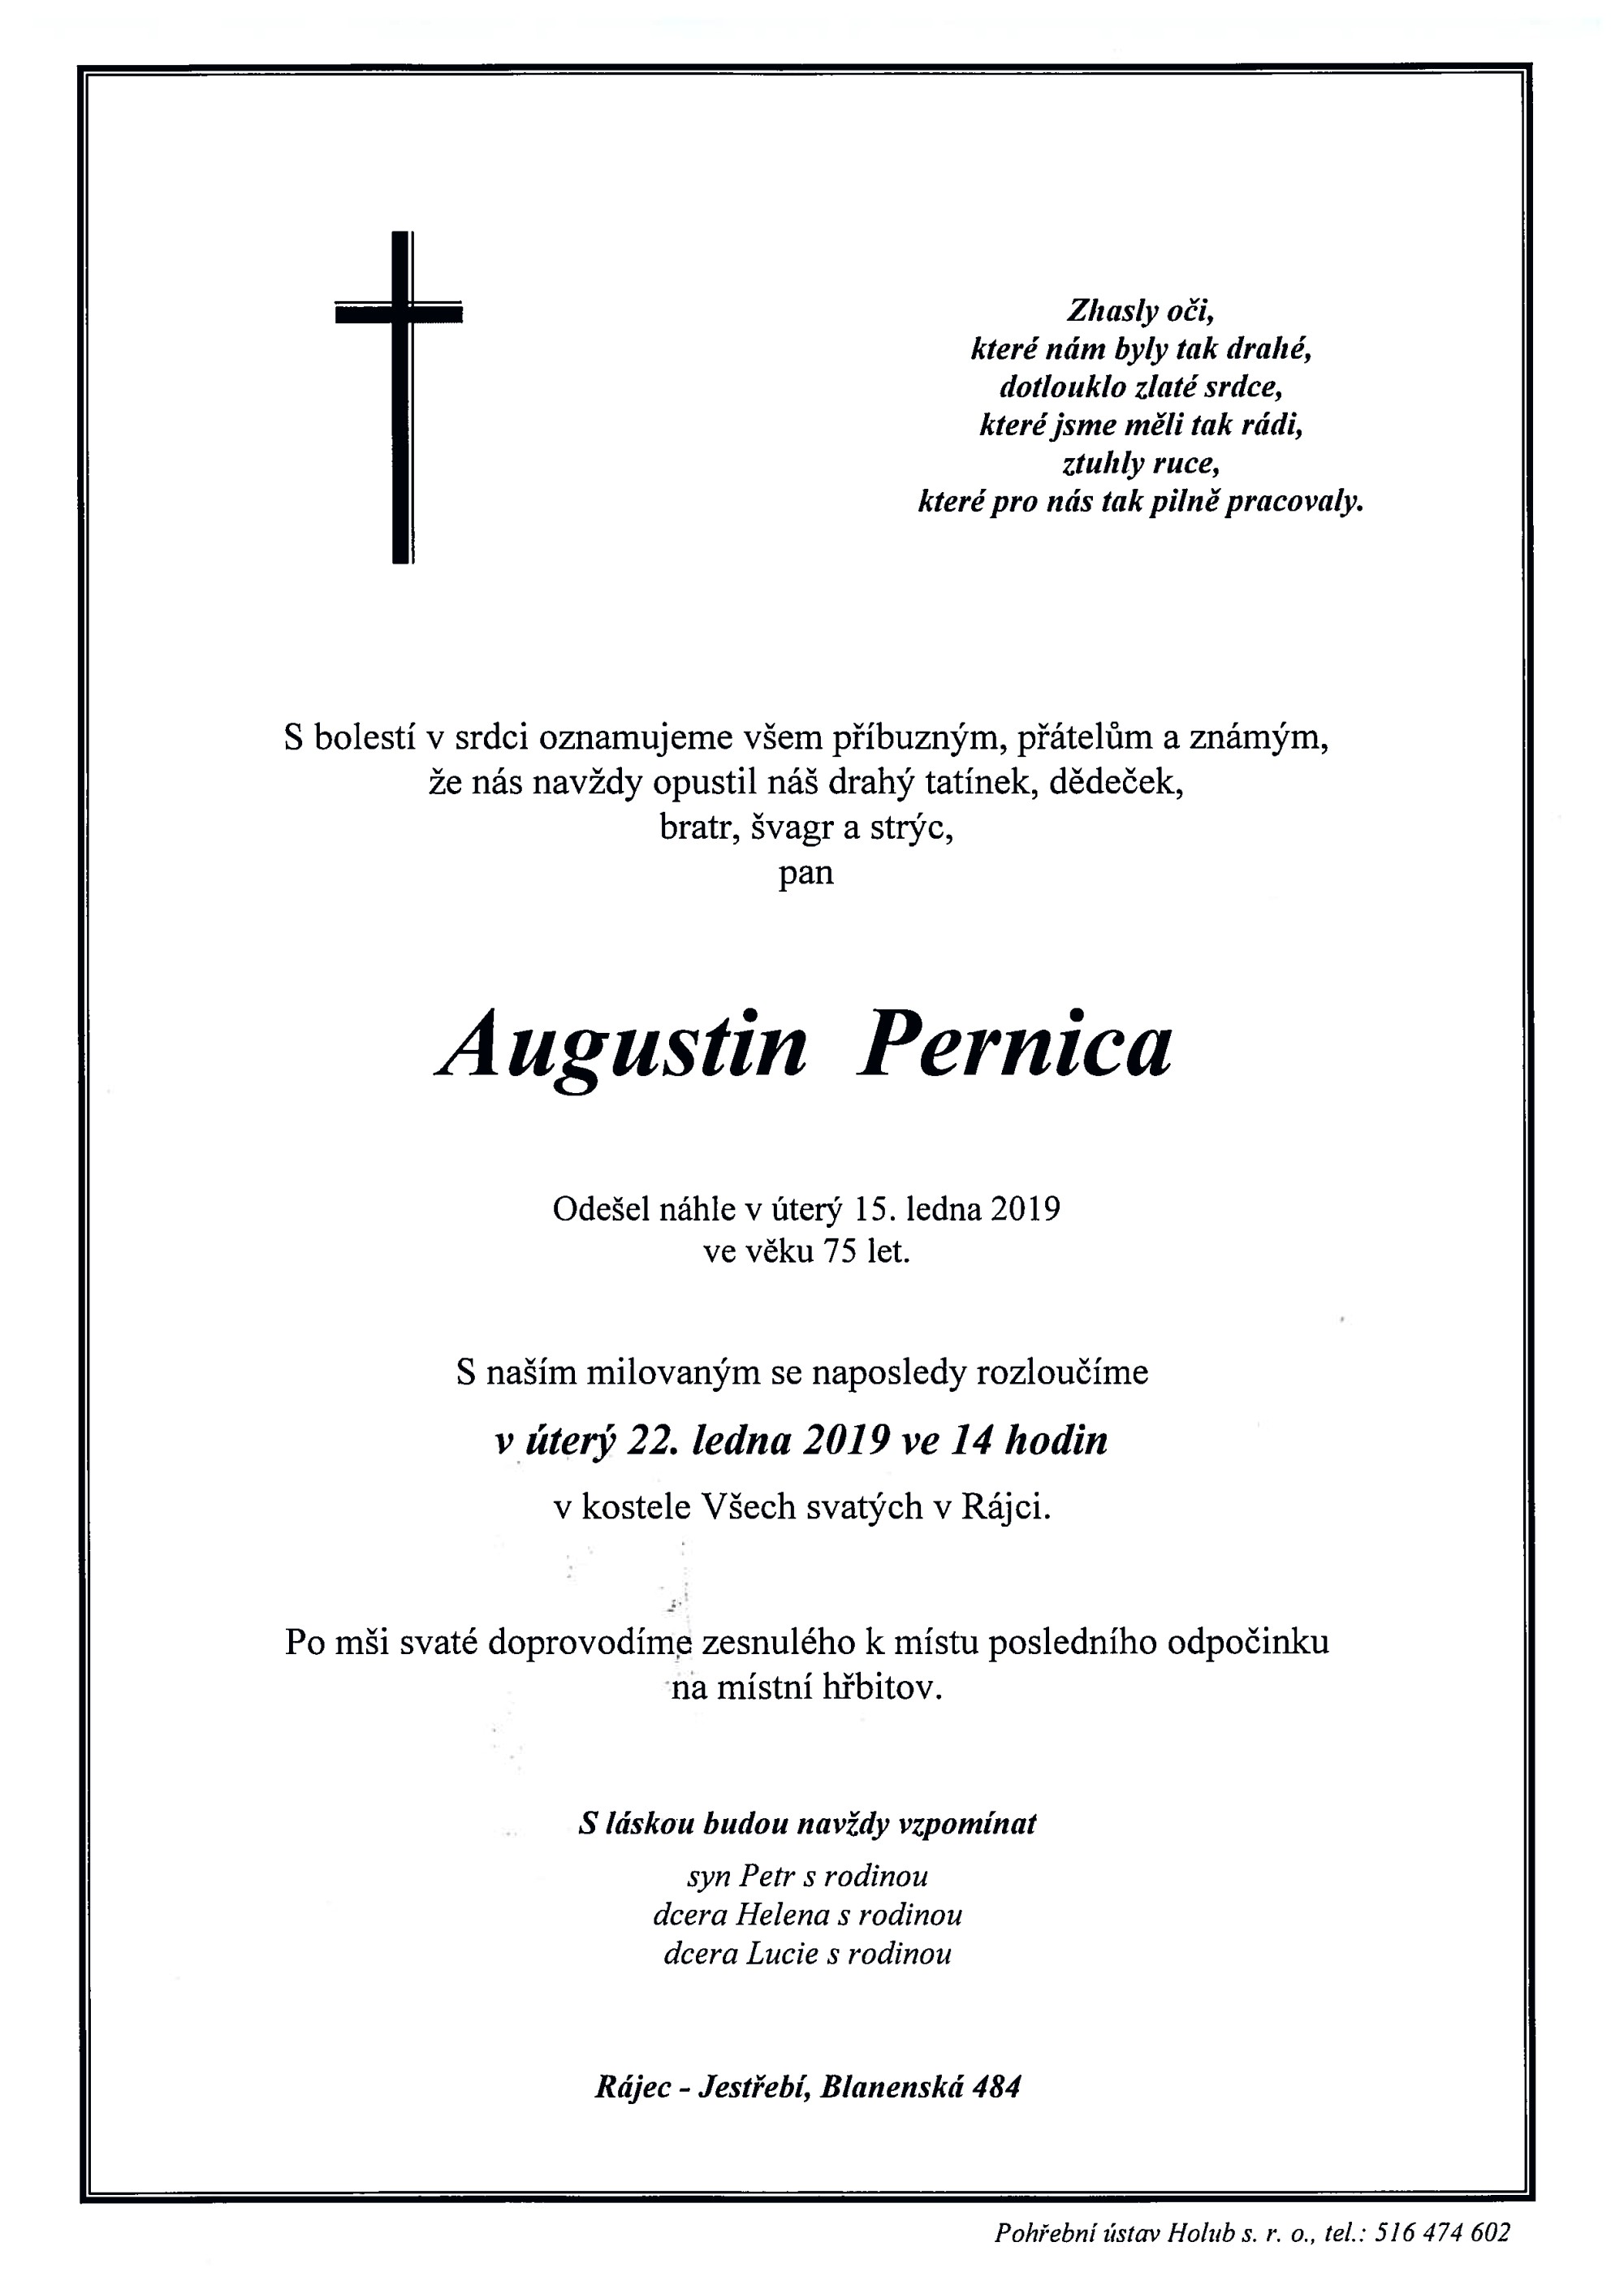 Augustin Pernica